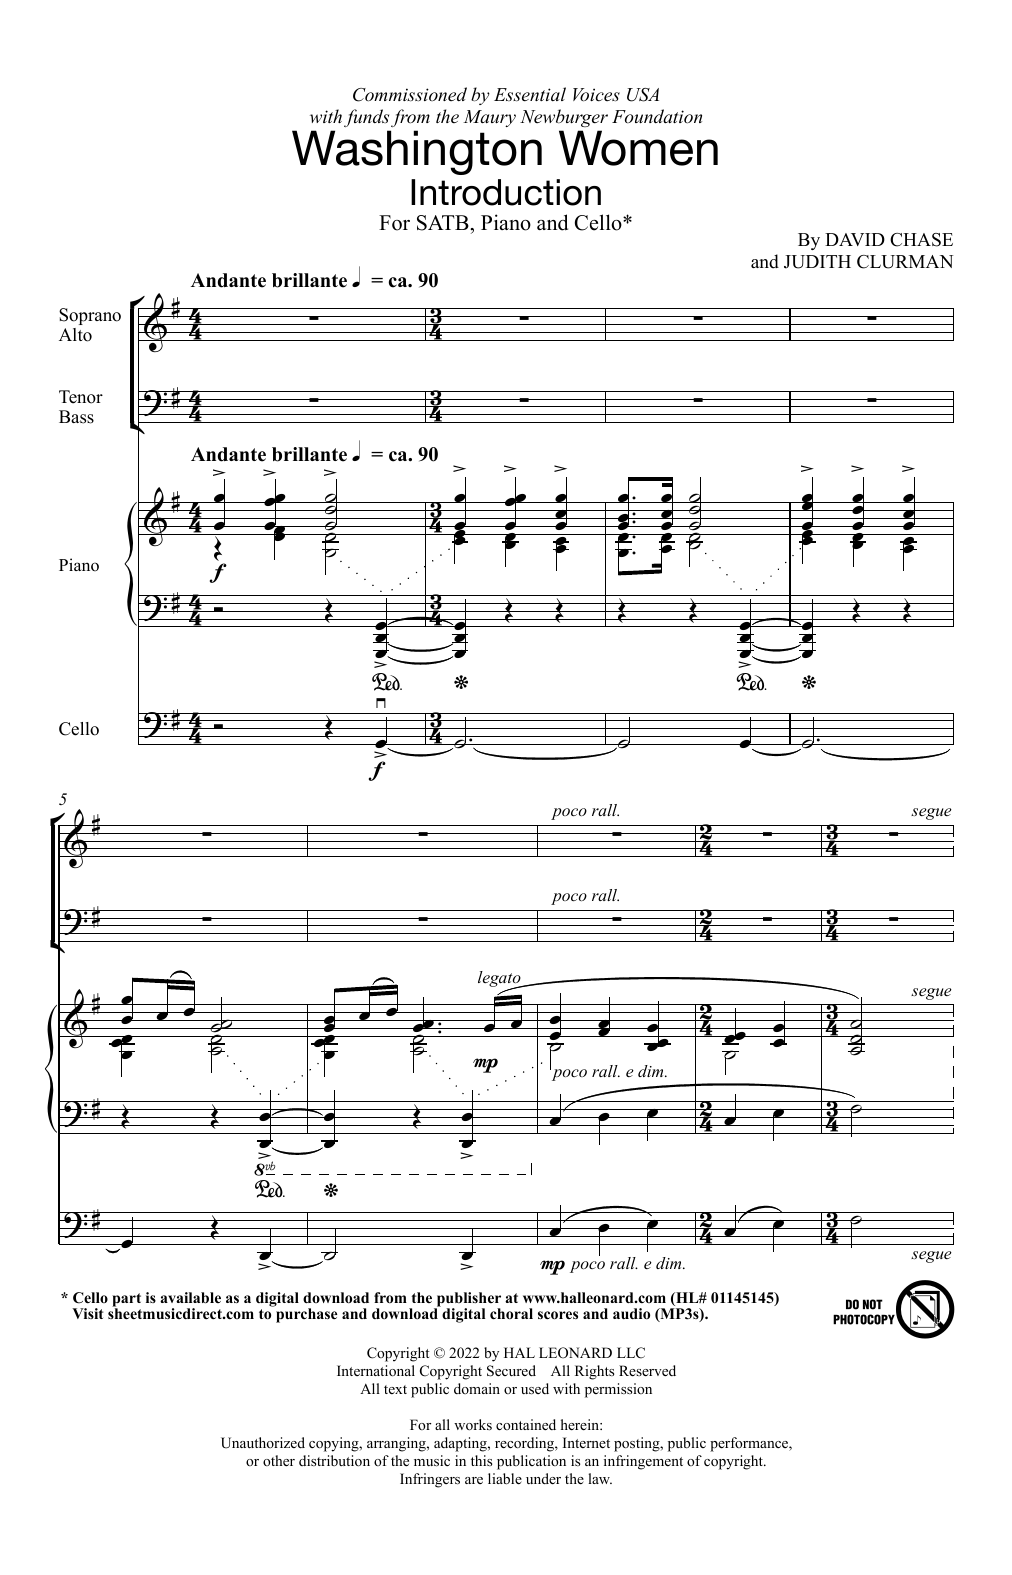 David Chase & Judith Clurman Washington Women Sheet Music Notes & Chords for SATB Choir - Download or Print PDF